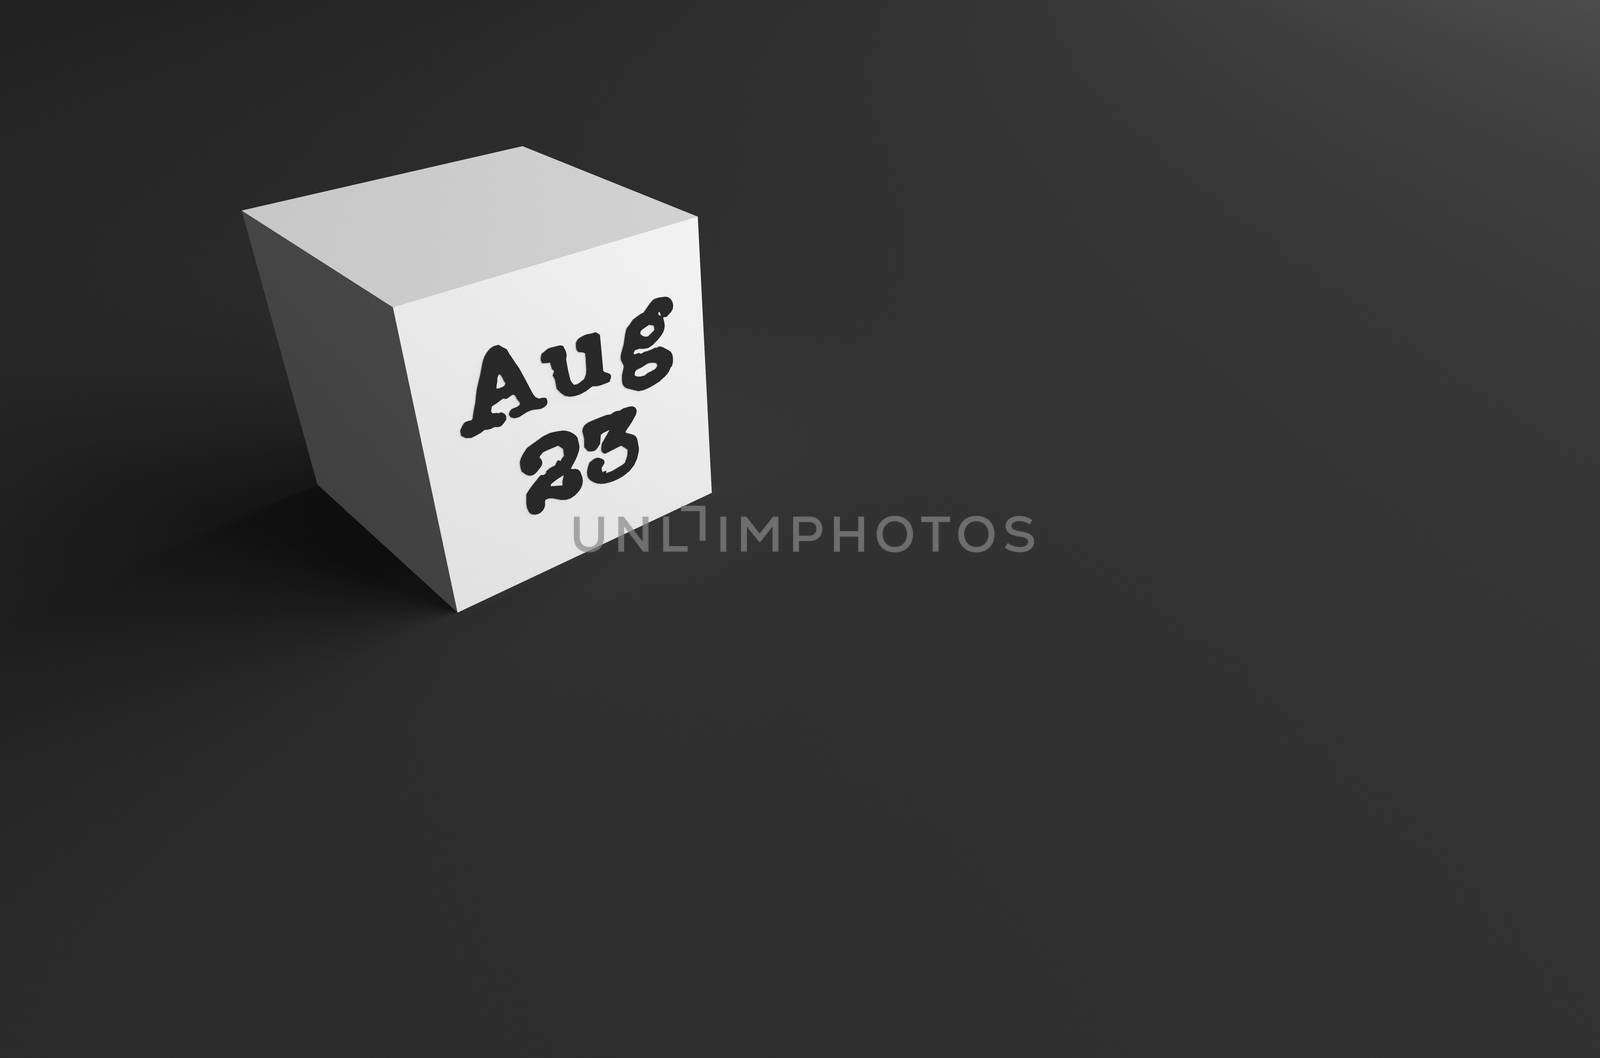 3D RENDERING OF Aug 23 by PrettyTG